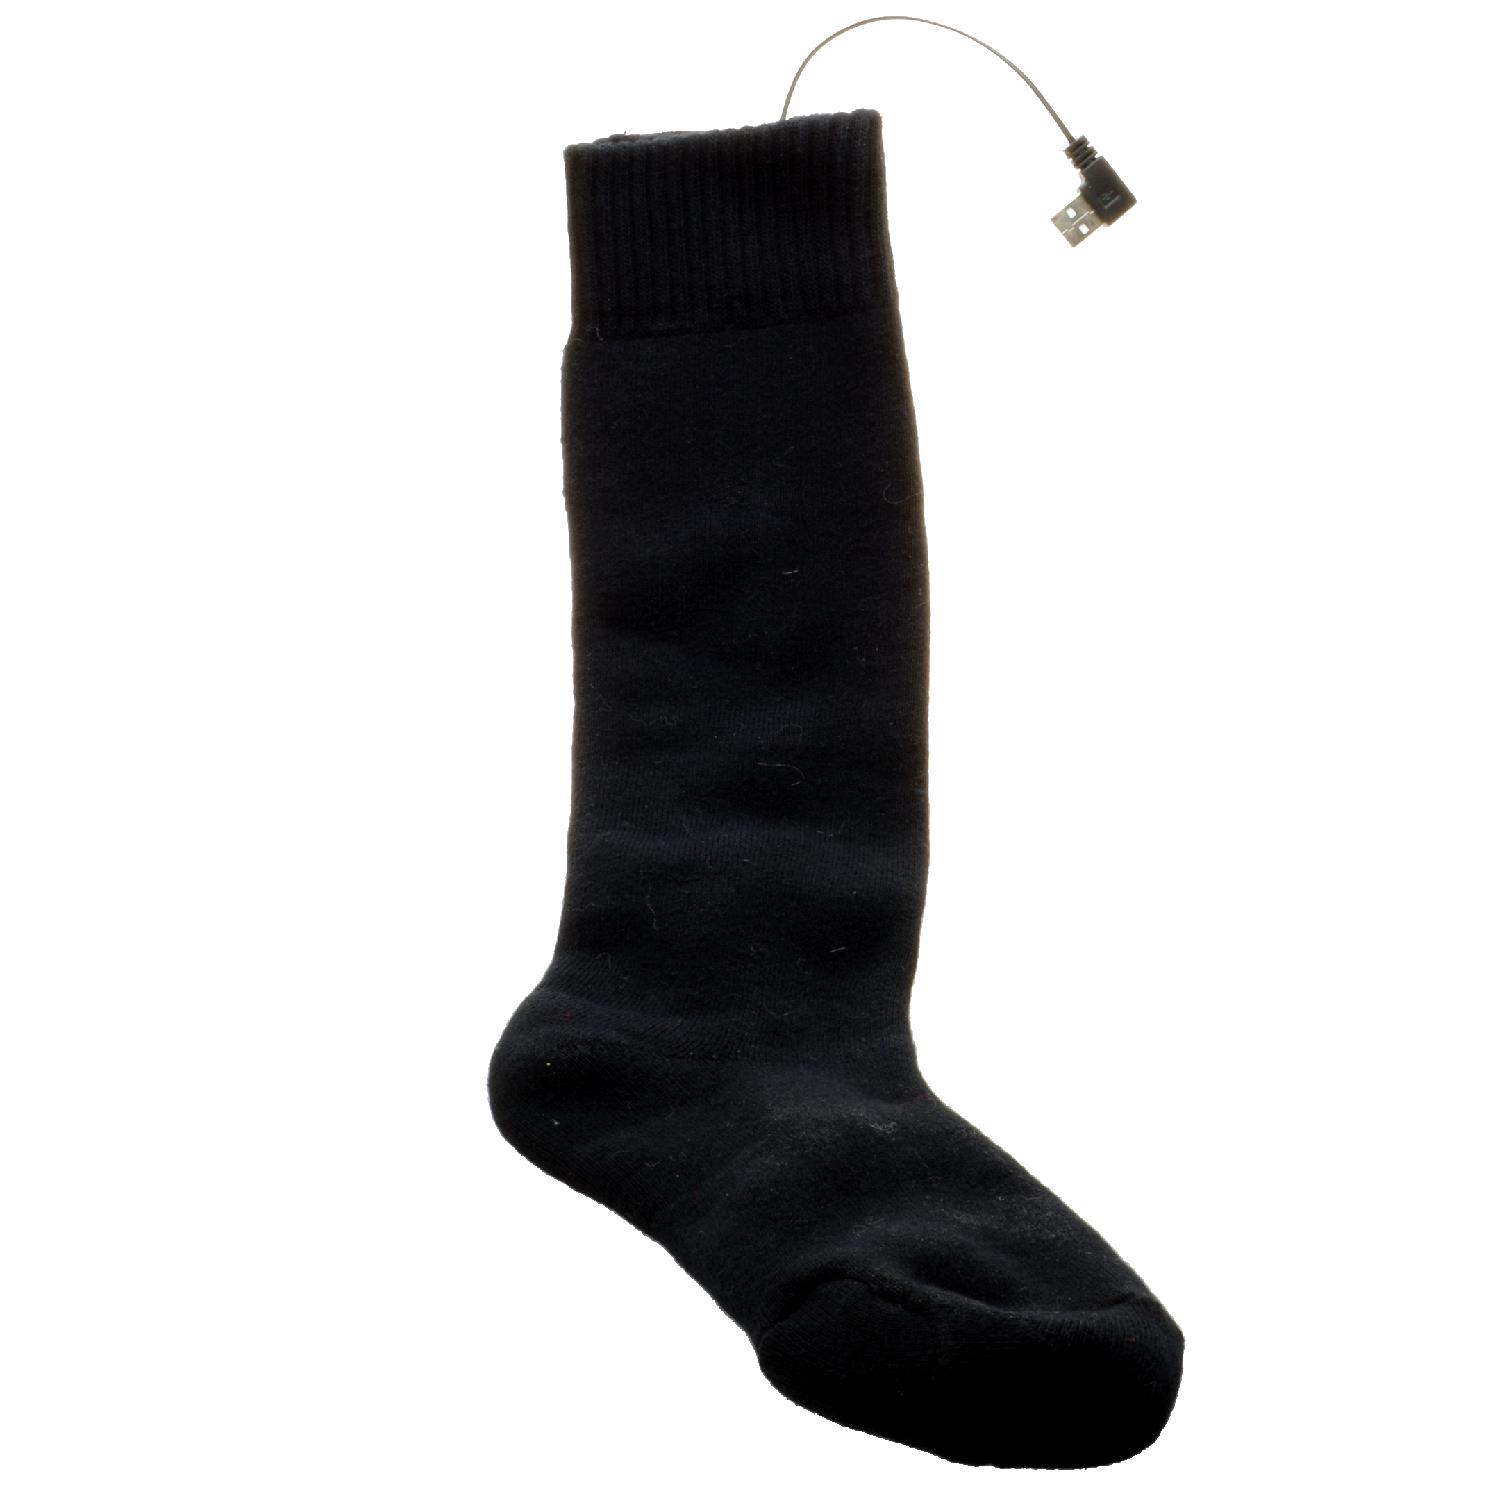 Glovii - Thermoactive socks with remote, size L